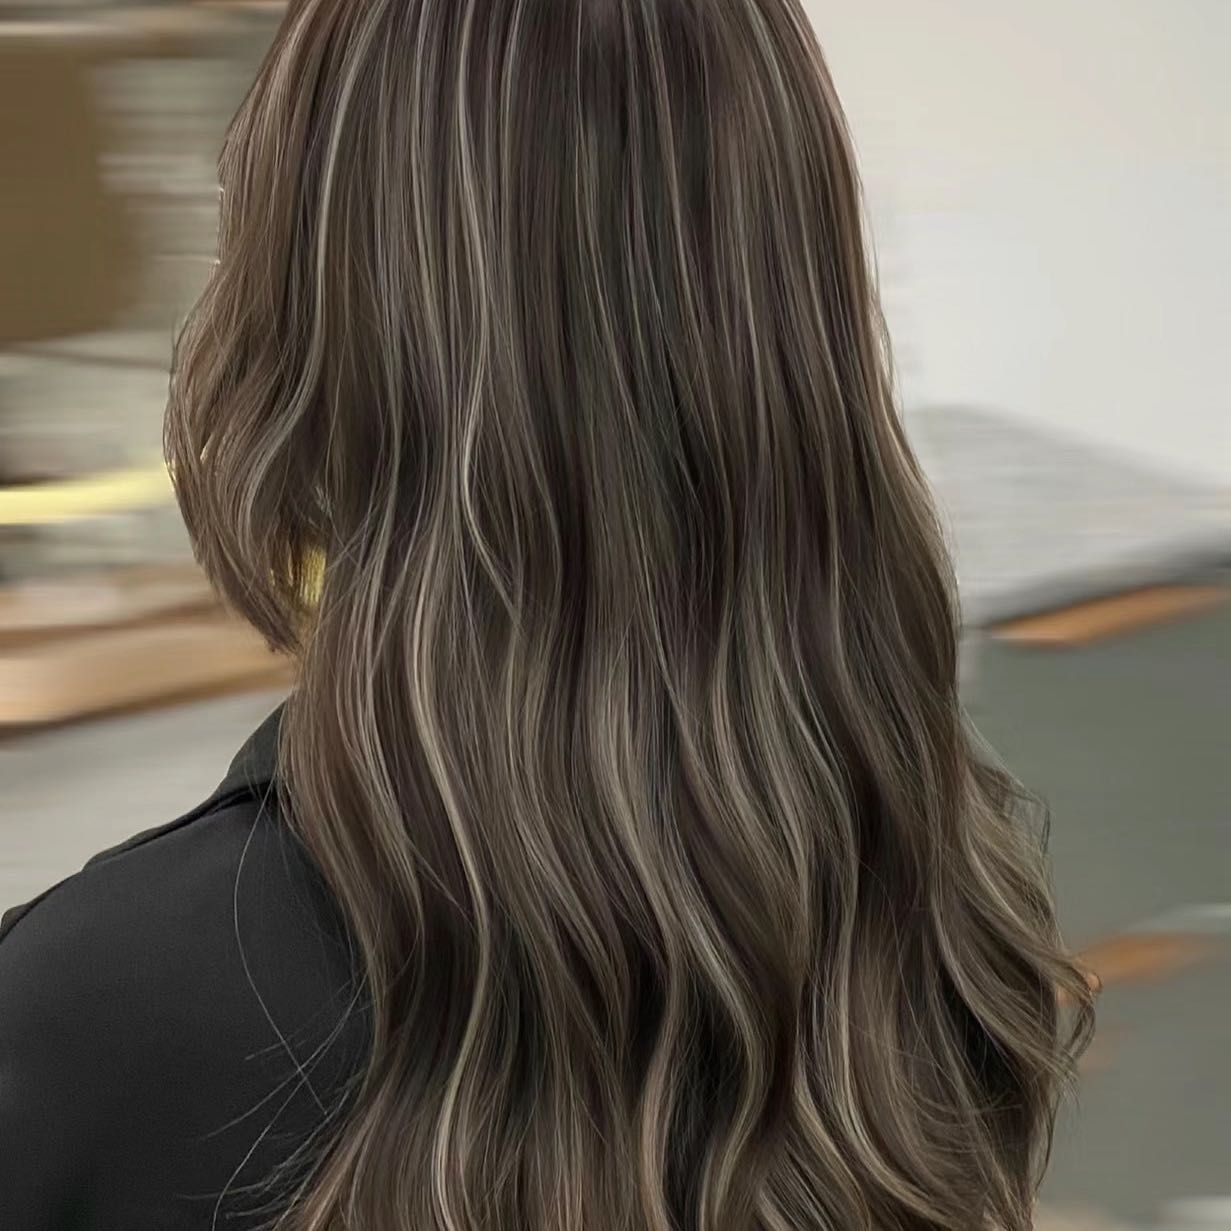 Mid hair | Long hair Highlights portfolio